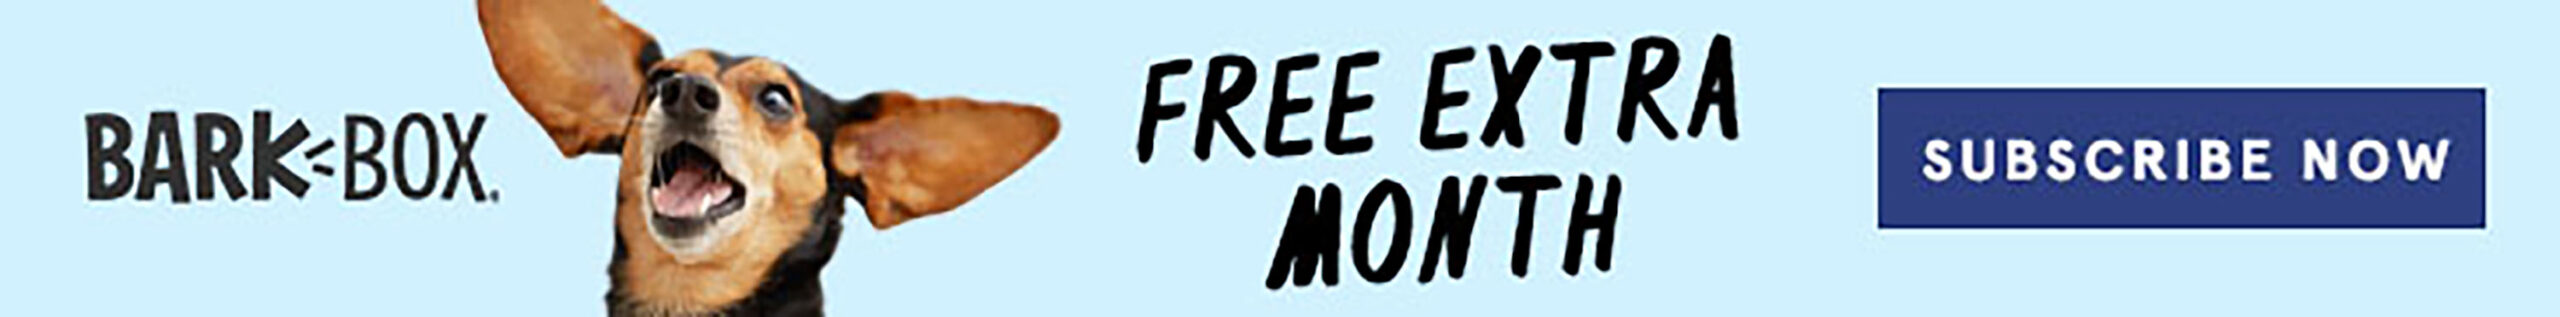 BarkBox Free Extra Month | MoonDogReviews.com